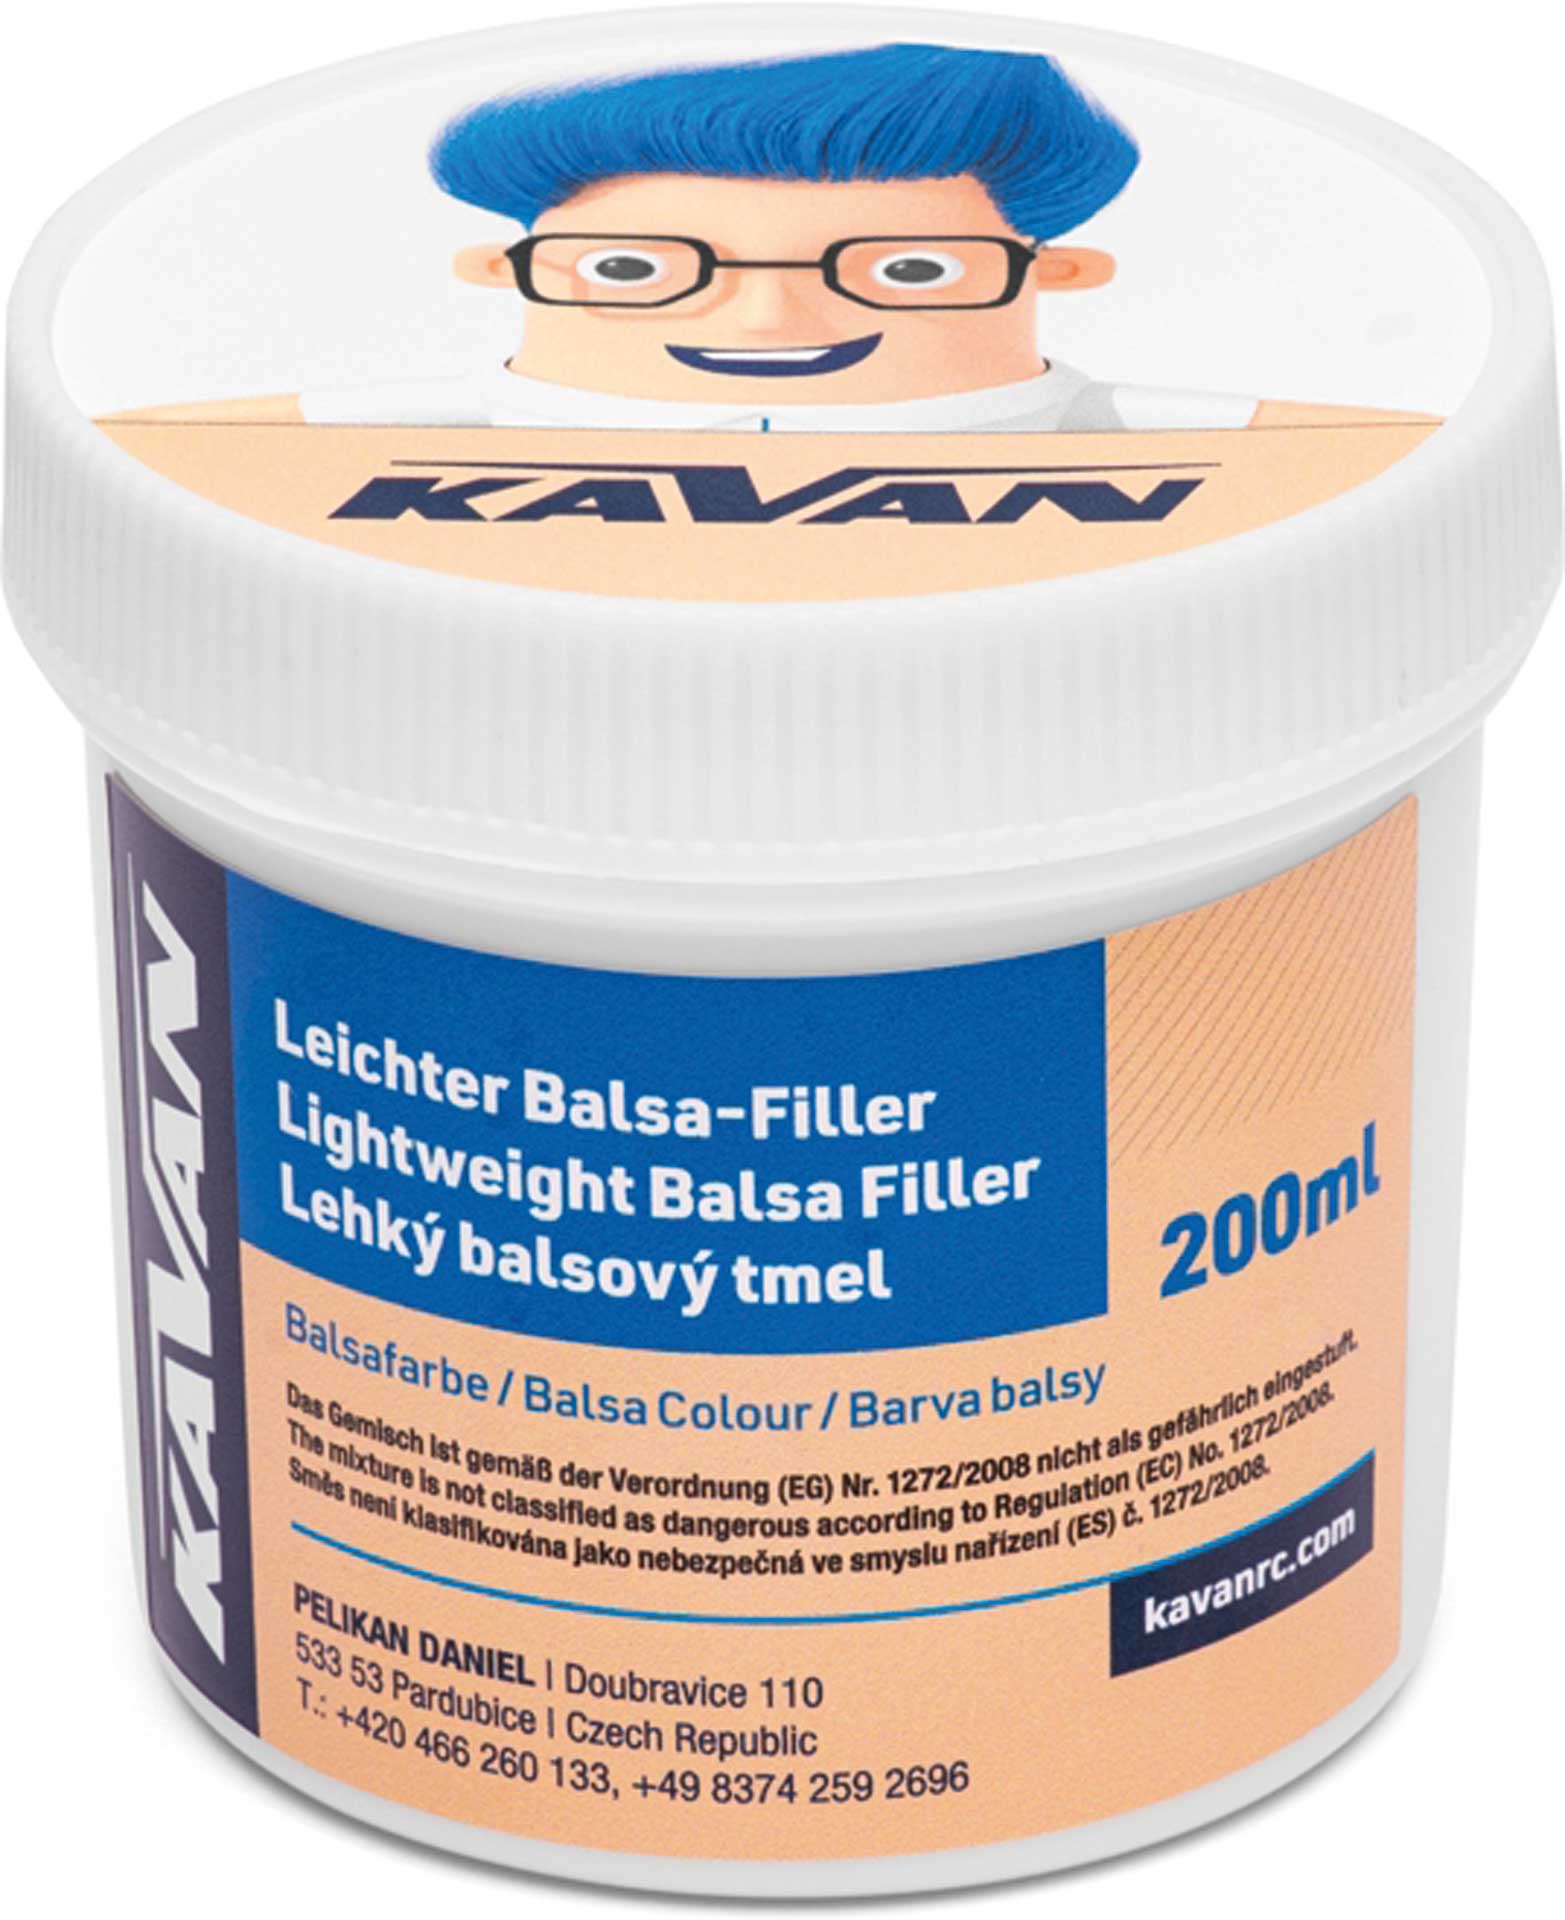 KAVAN Balsa-Filler 200ml - Balsafarbe (DE Etikette)